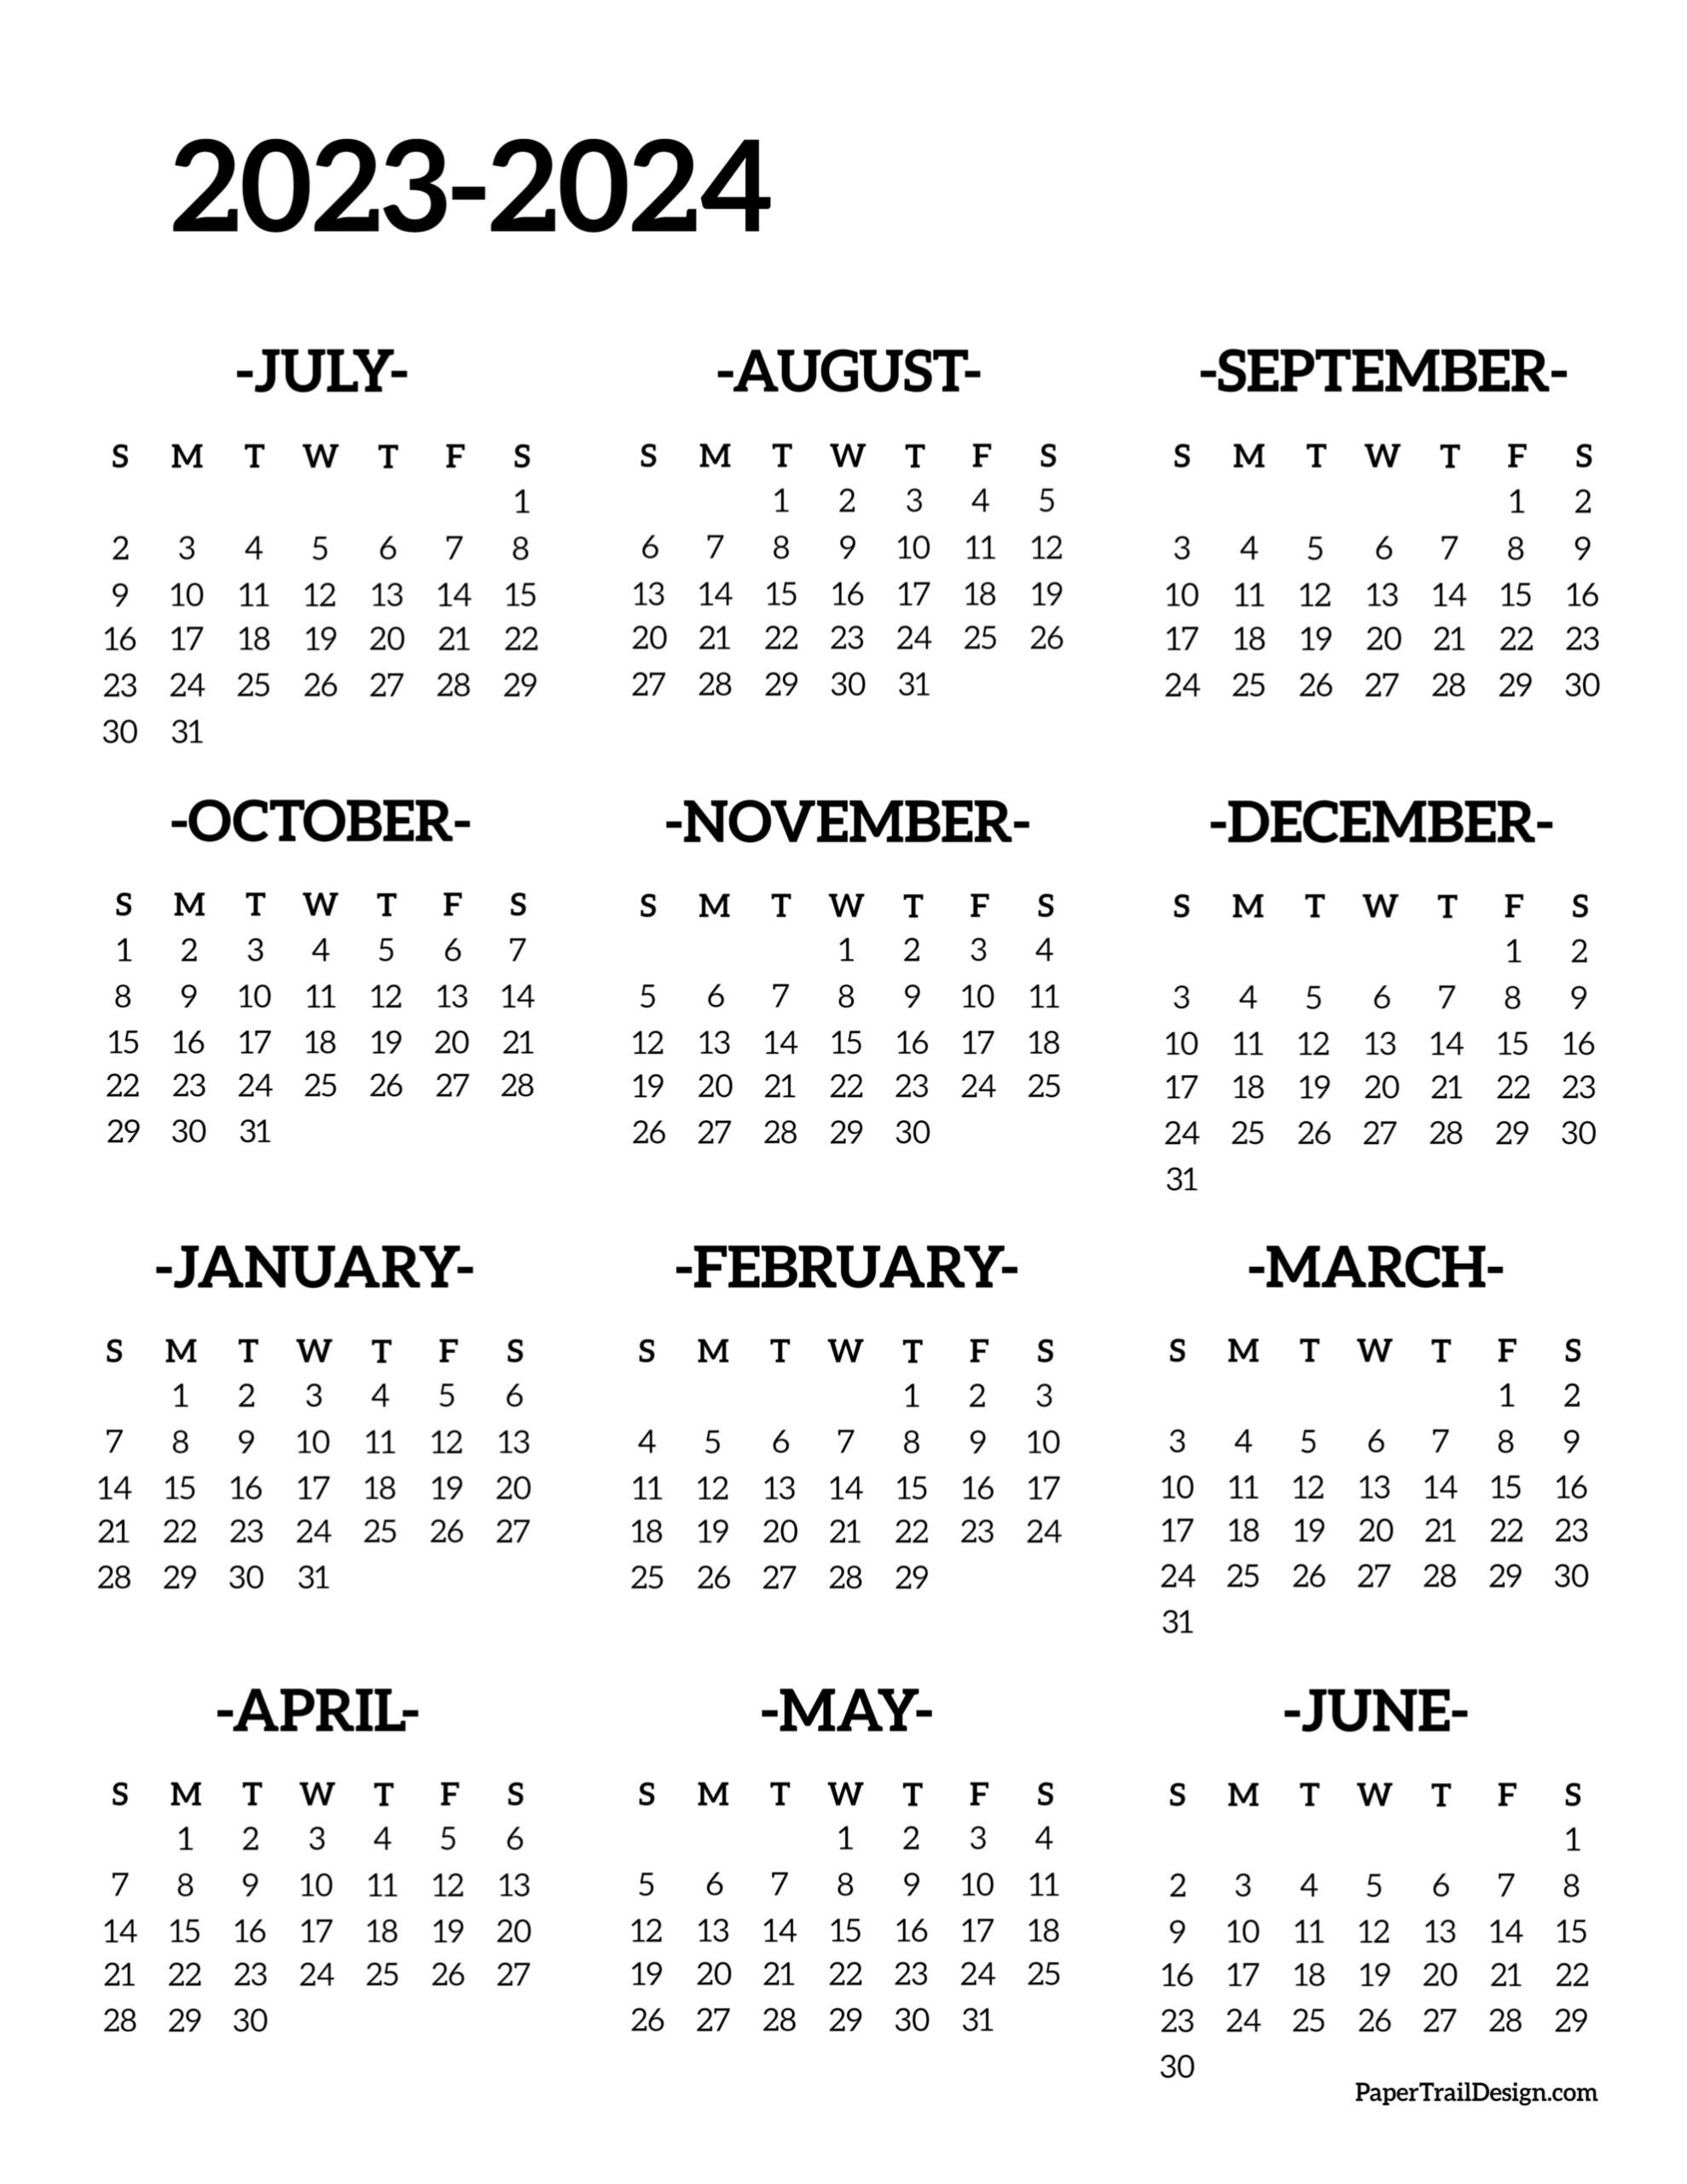 2023-2024 School Year Calendar Free Printable - Paper Trail Design for 2023 And 2024 School Calendar Printable